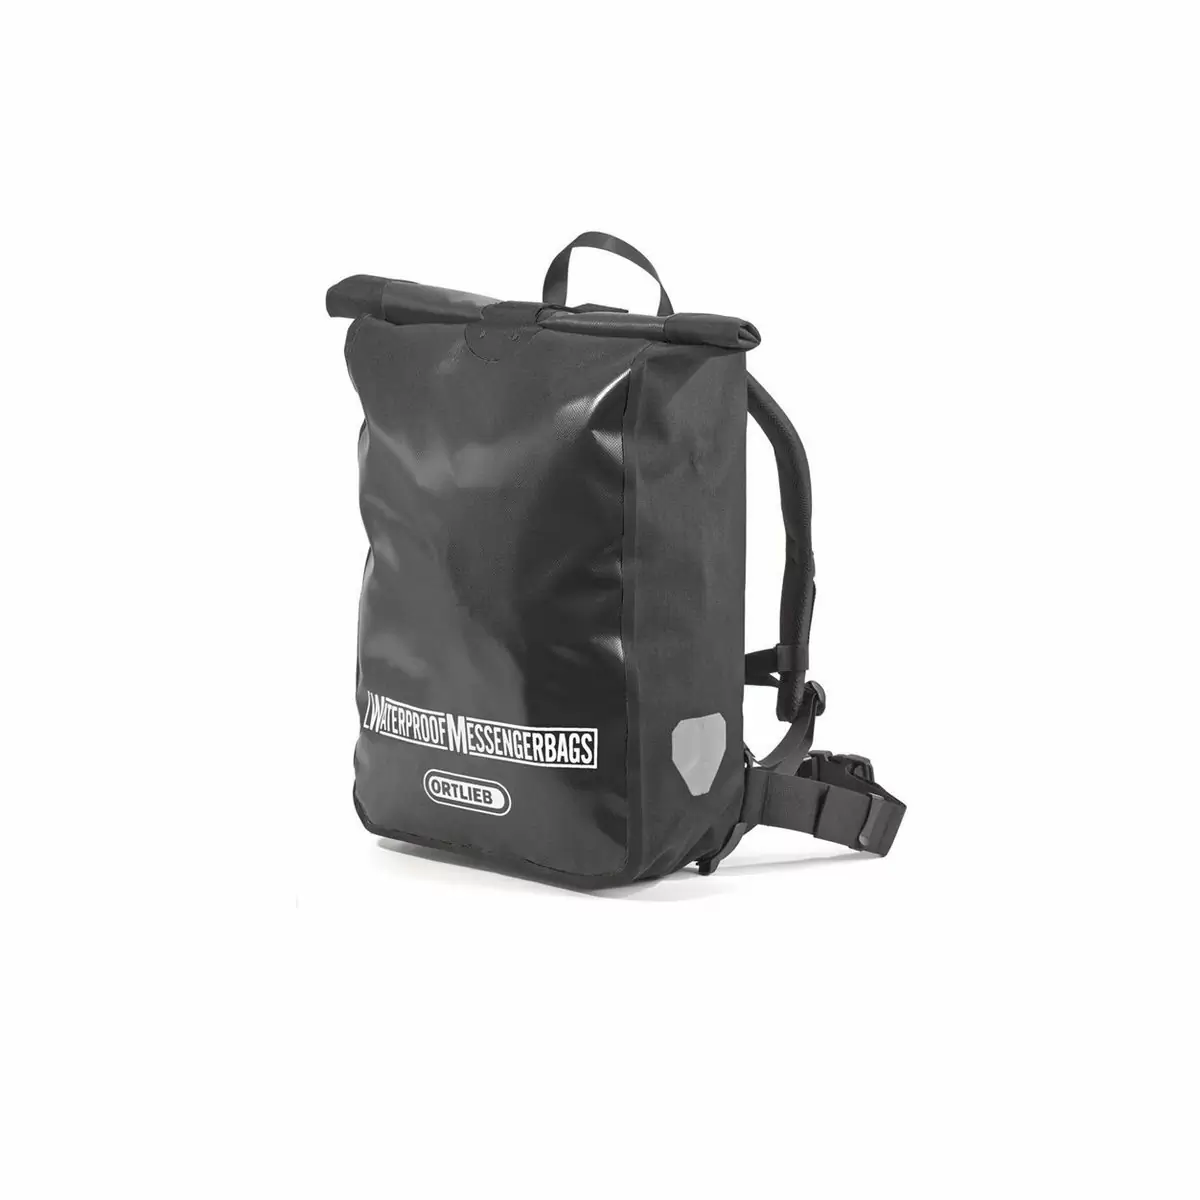 Mochila Messenger Bag F2305 negro - image